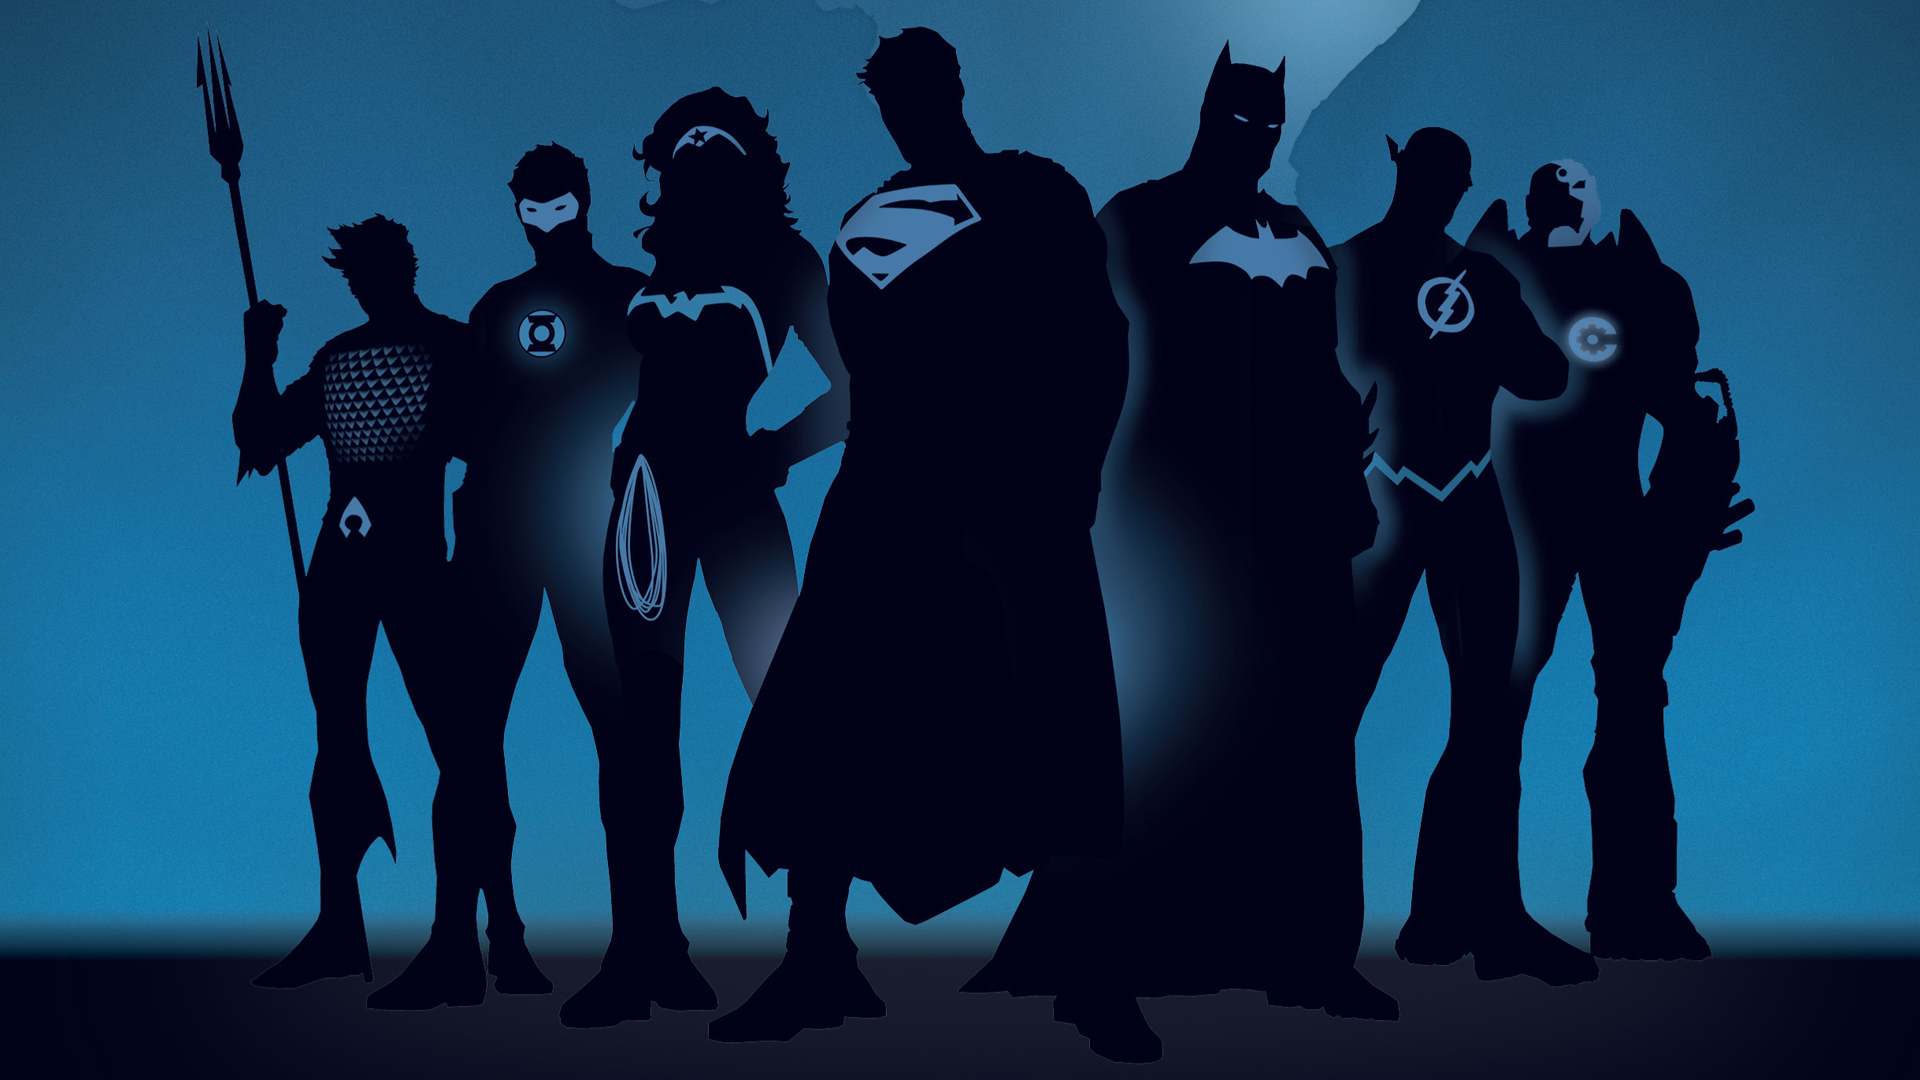 justice league, superman, bruce wayne, batman, dc comics, comics, wonder woman, aquaman, barry allen, cyborg (dc comics), diana prince, flash, green lantern, the dark knight